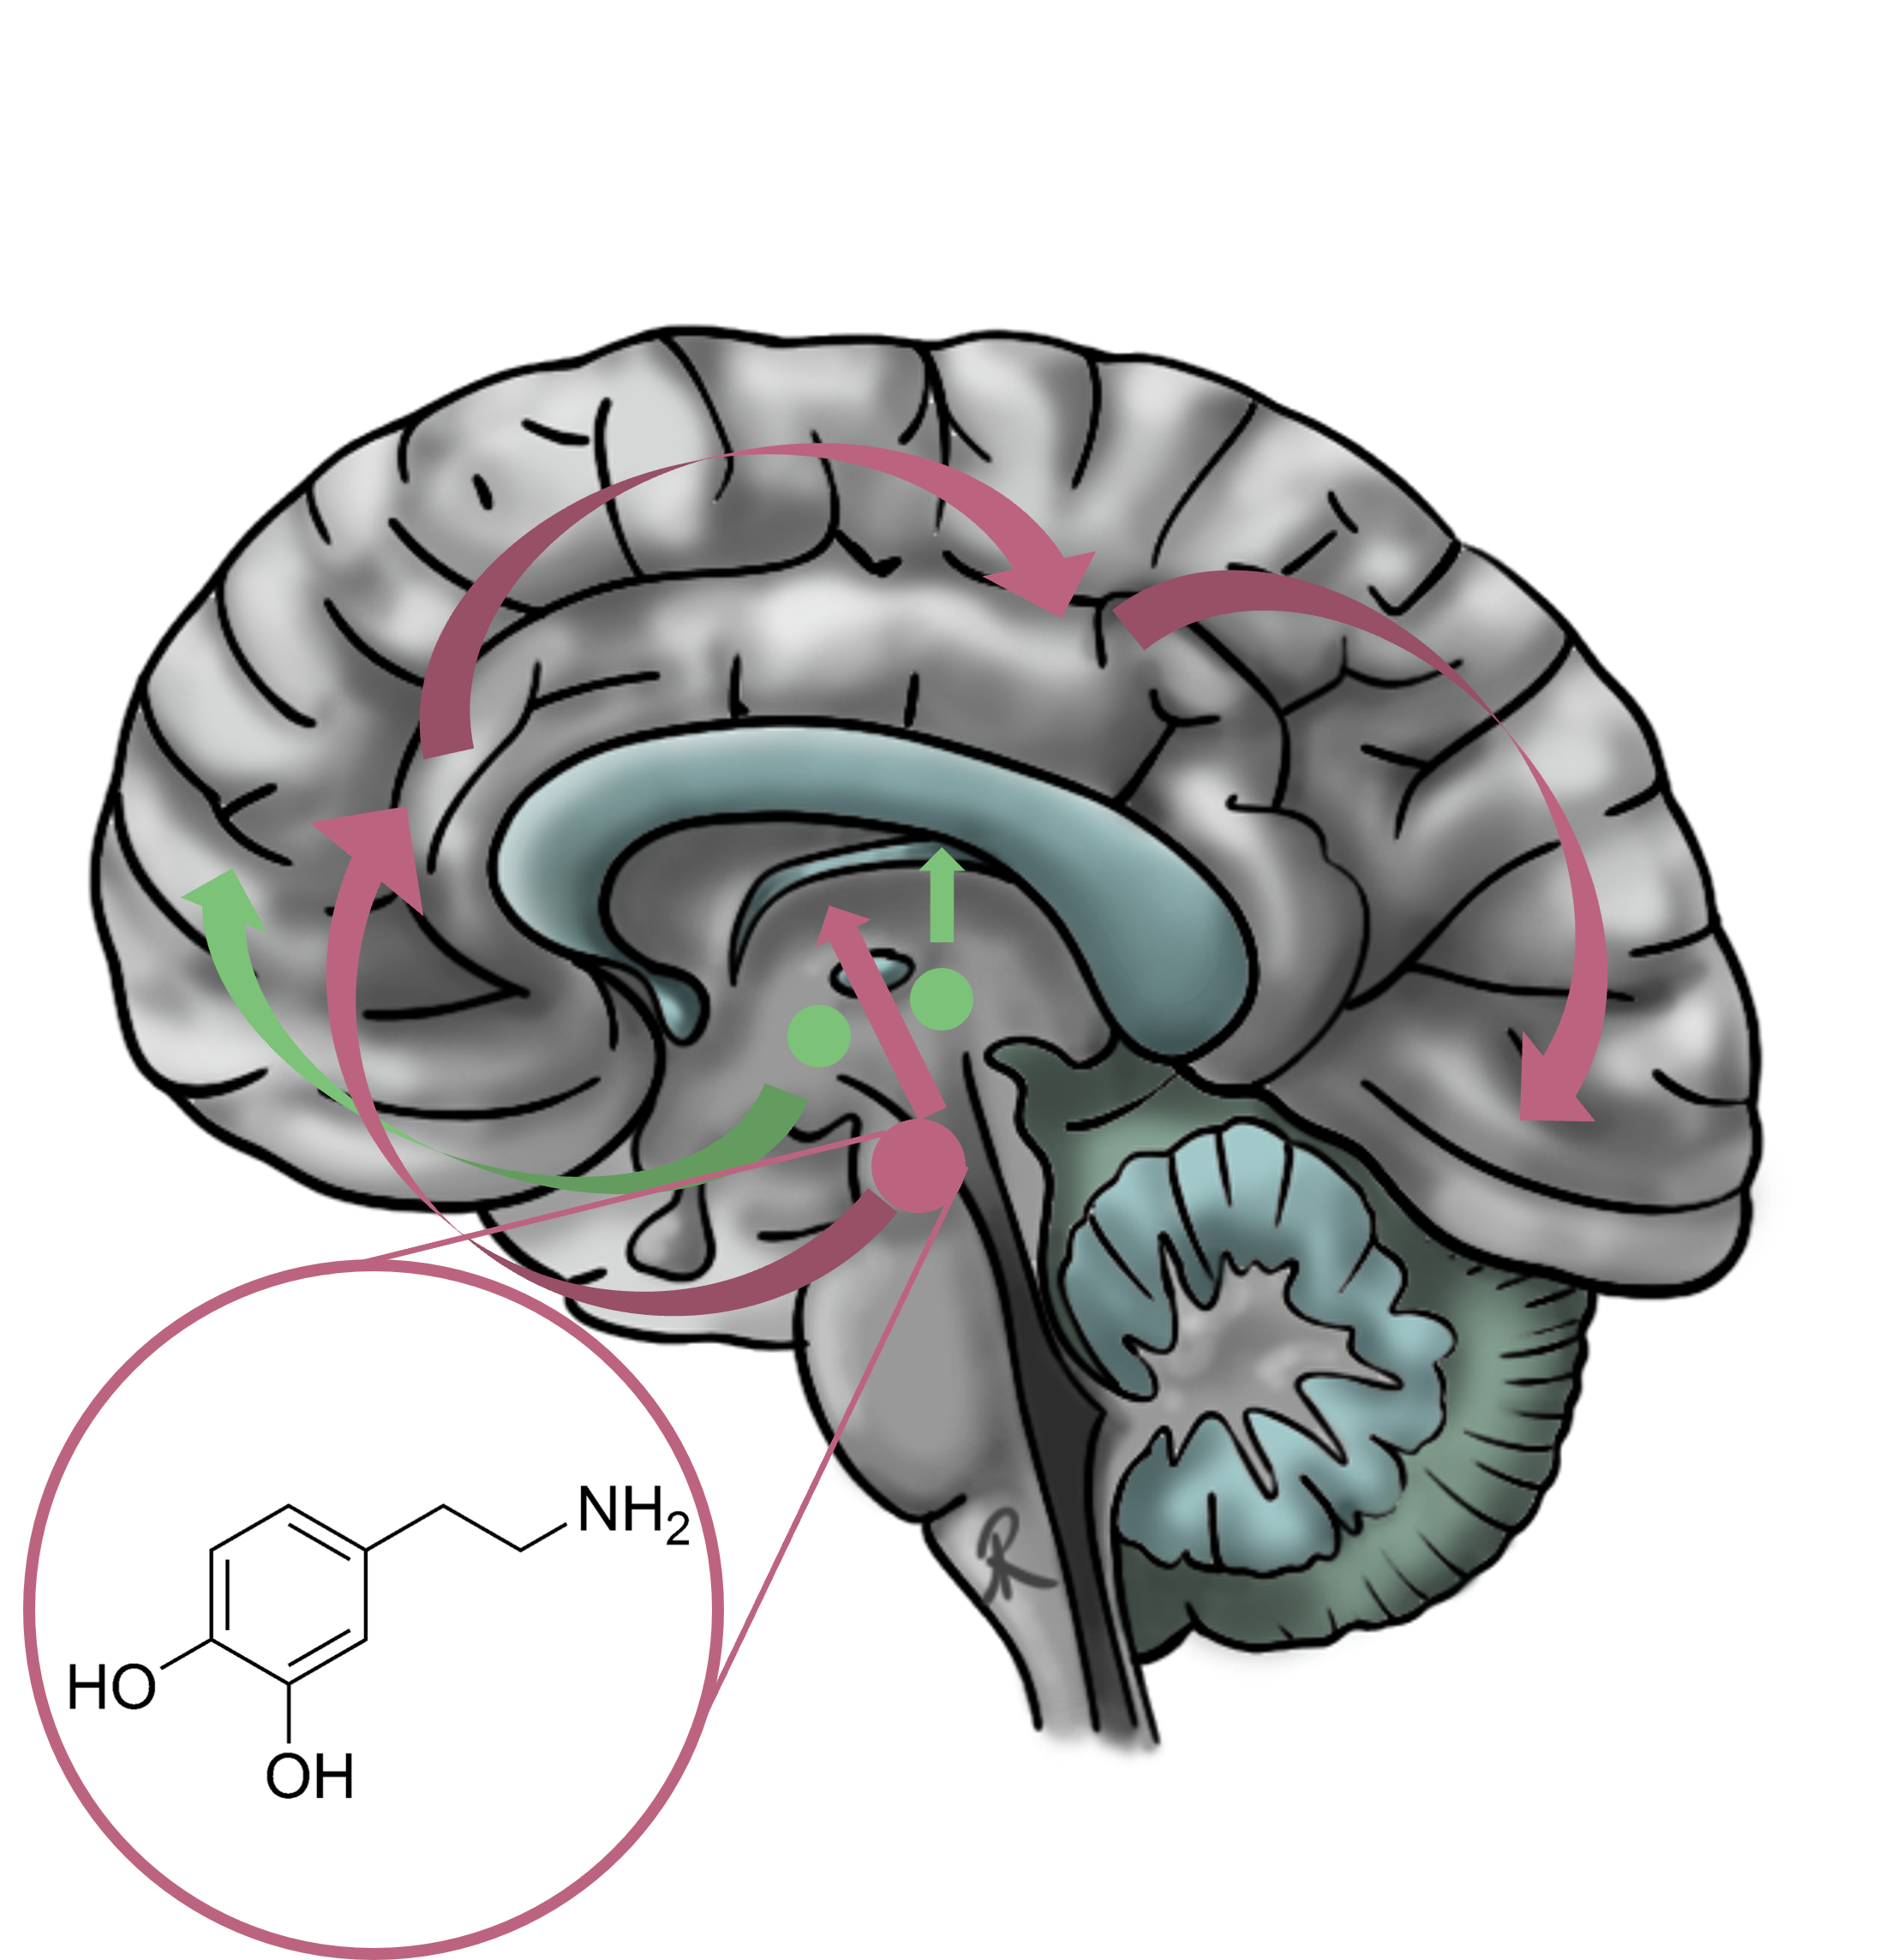 Figure illustrating the dopamine pathways in the human brain